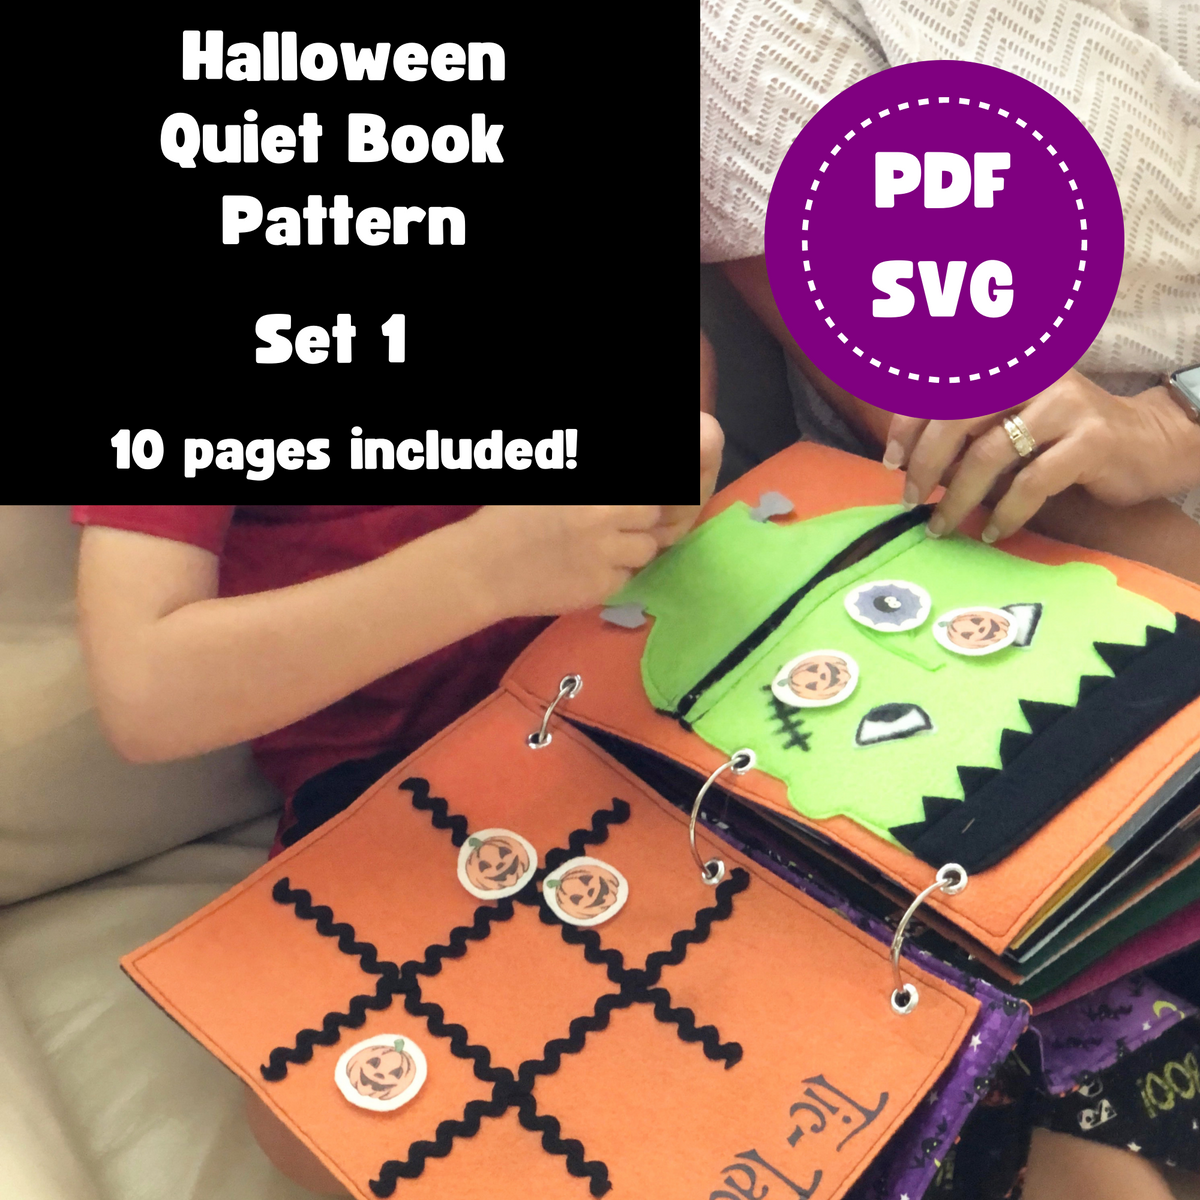 Halloween Set 1 Quiet Book Template and Instructions Bundle